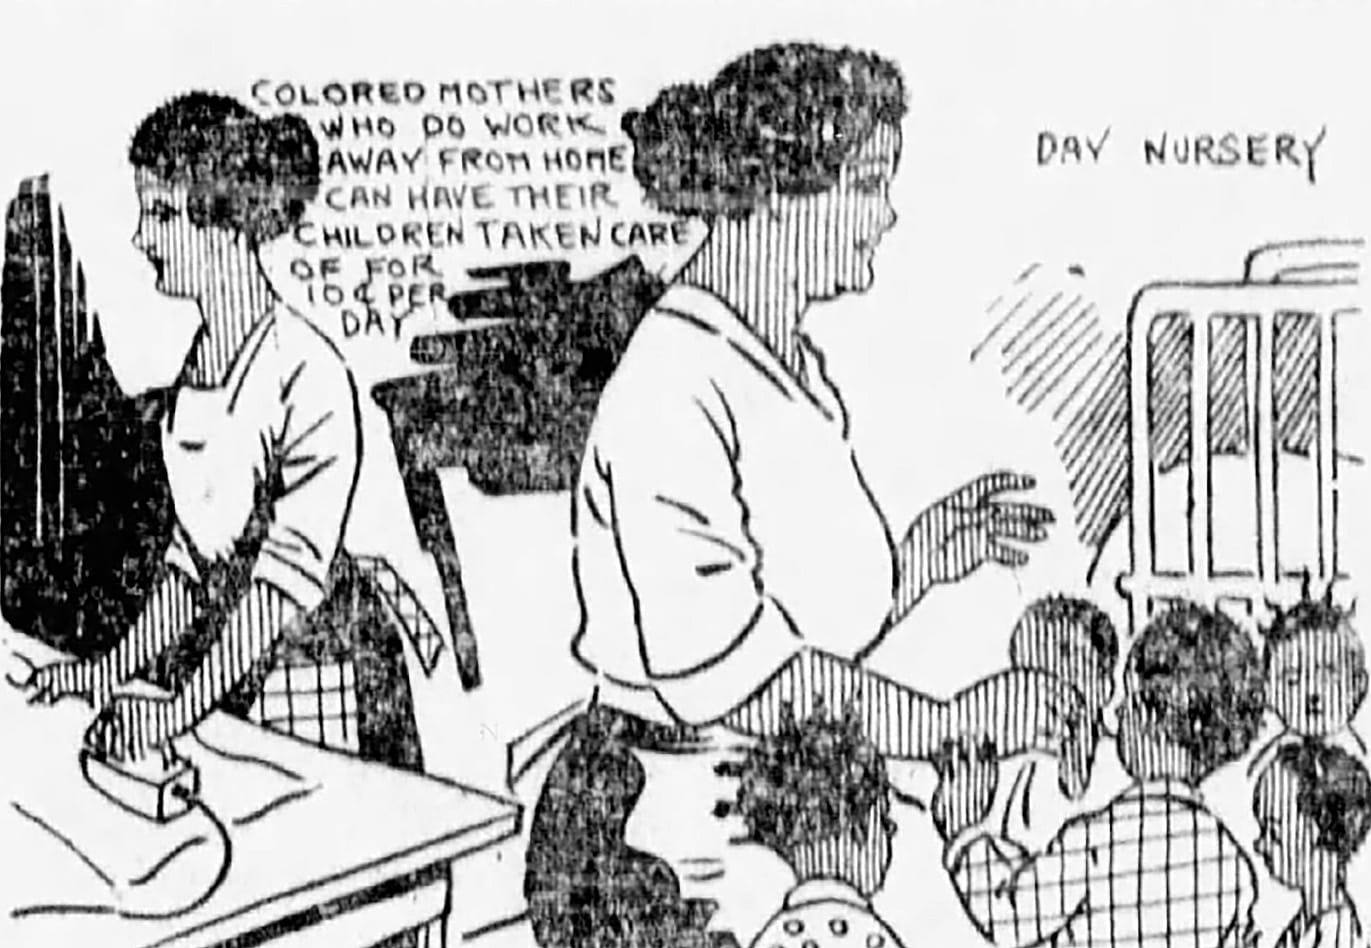 1920 Colored Day Nursery Wlil Accomplish Good